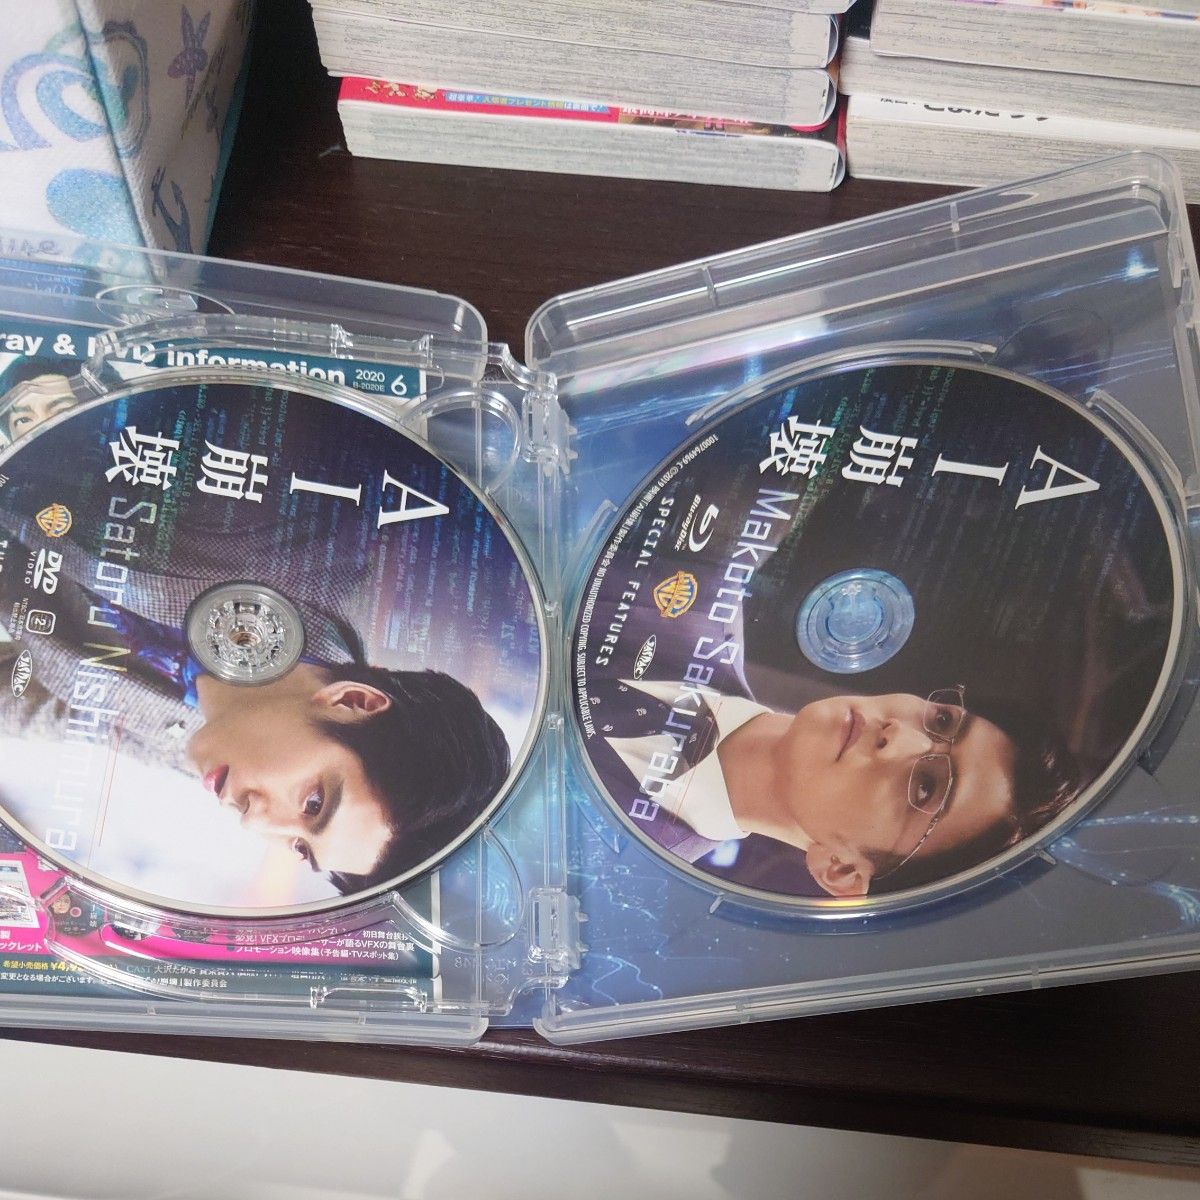 AI崩壊 ブルーレイ&DVDセット プレミアムエディション Blu-ray 大沢たかお、賀来賢人、岩田剛典、入江悠